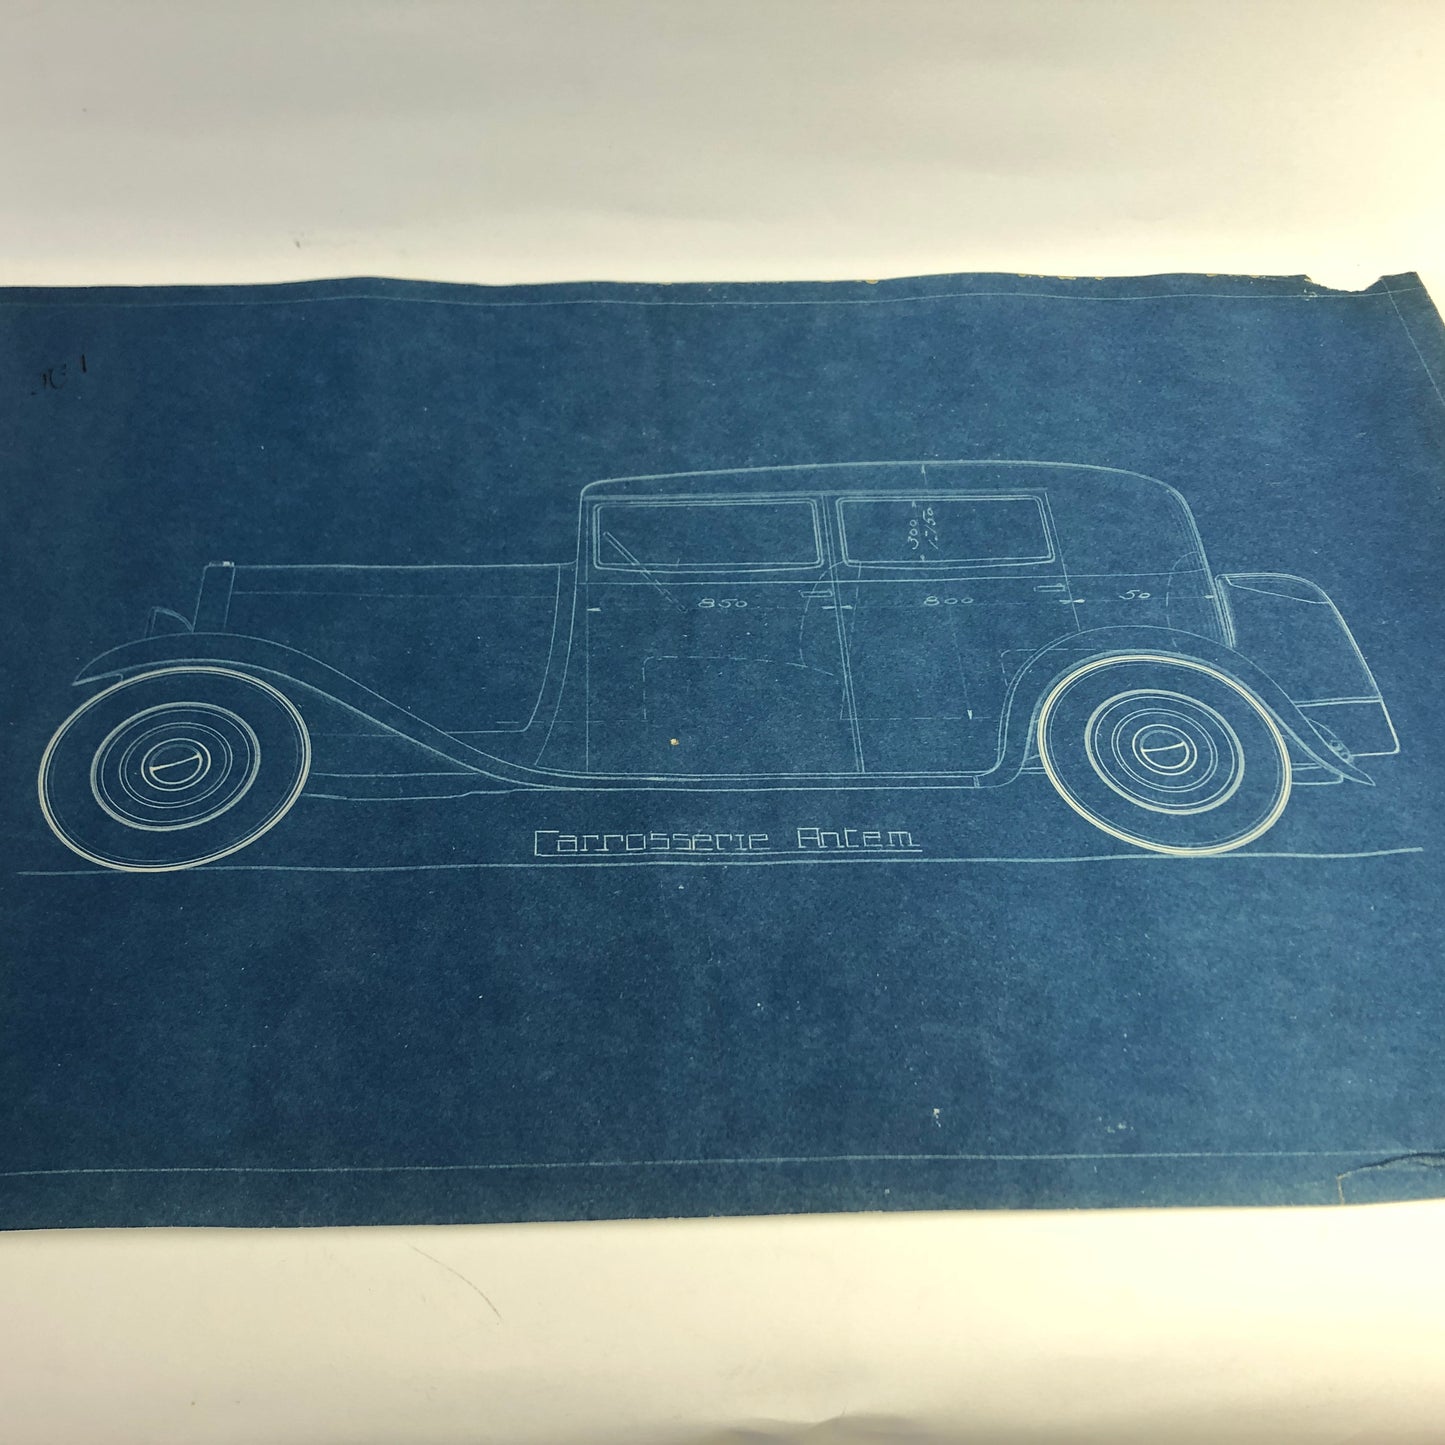 Carrosserie Antem, Blueprint n. 1 Year 1932 Licorne L760 with Carrosserie Antem stamp